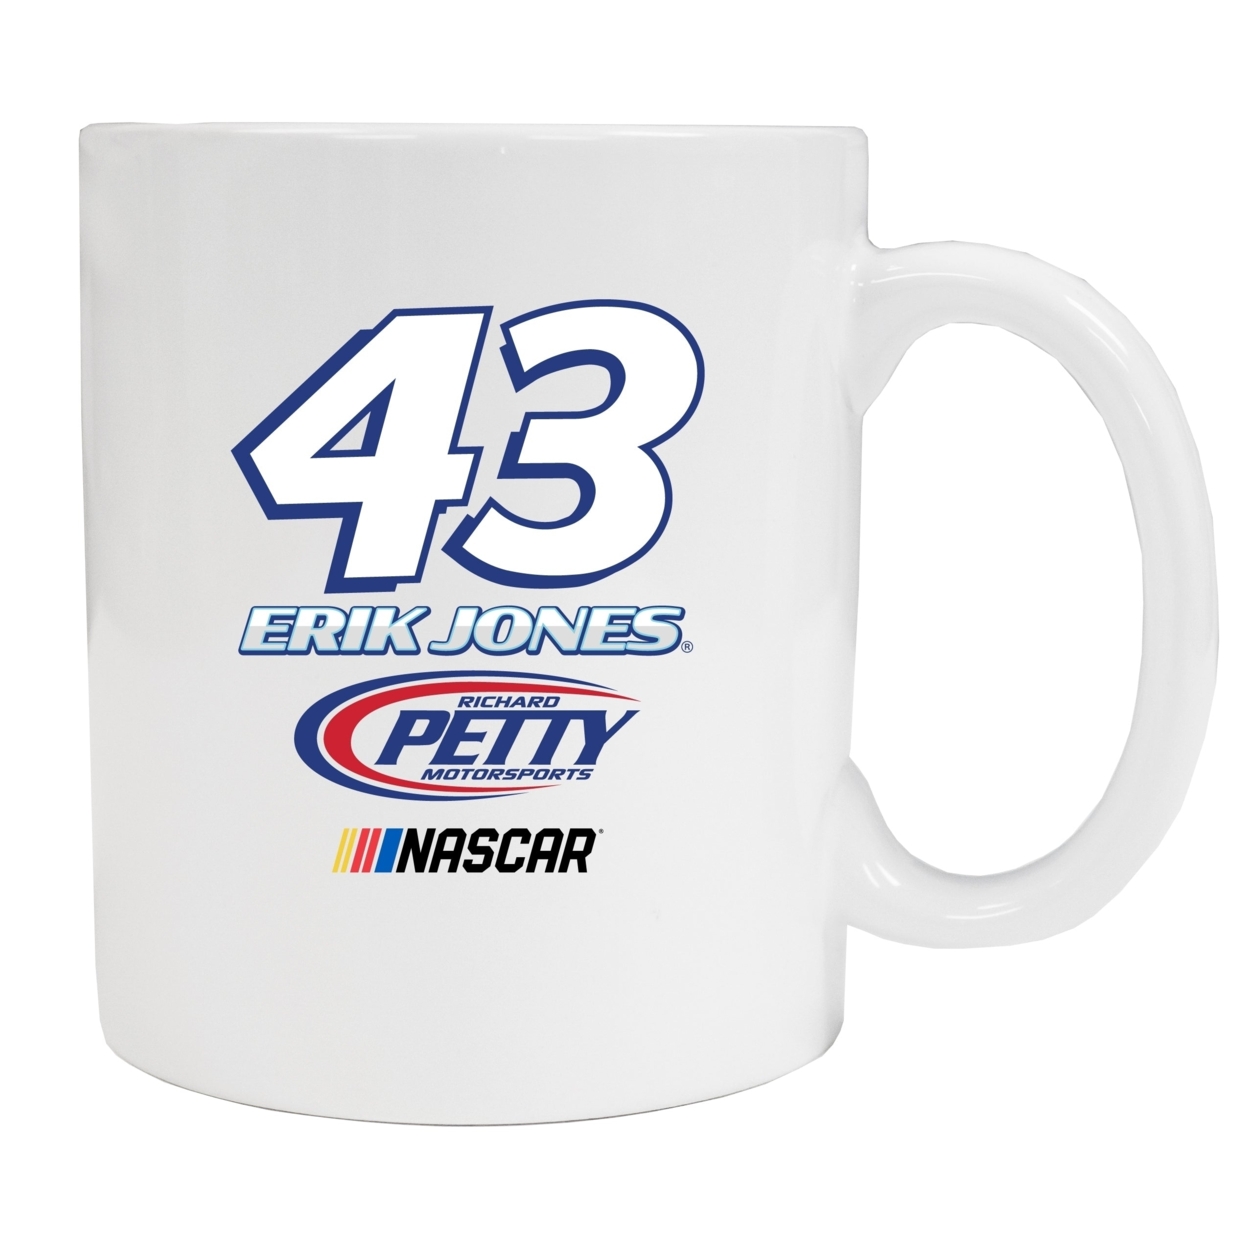 Erik Jones #43 NASCAR Cup Series 8oz Ceramic Mug